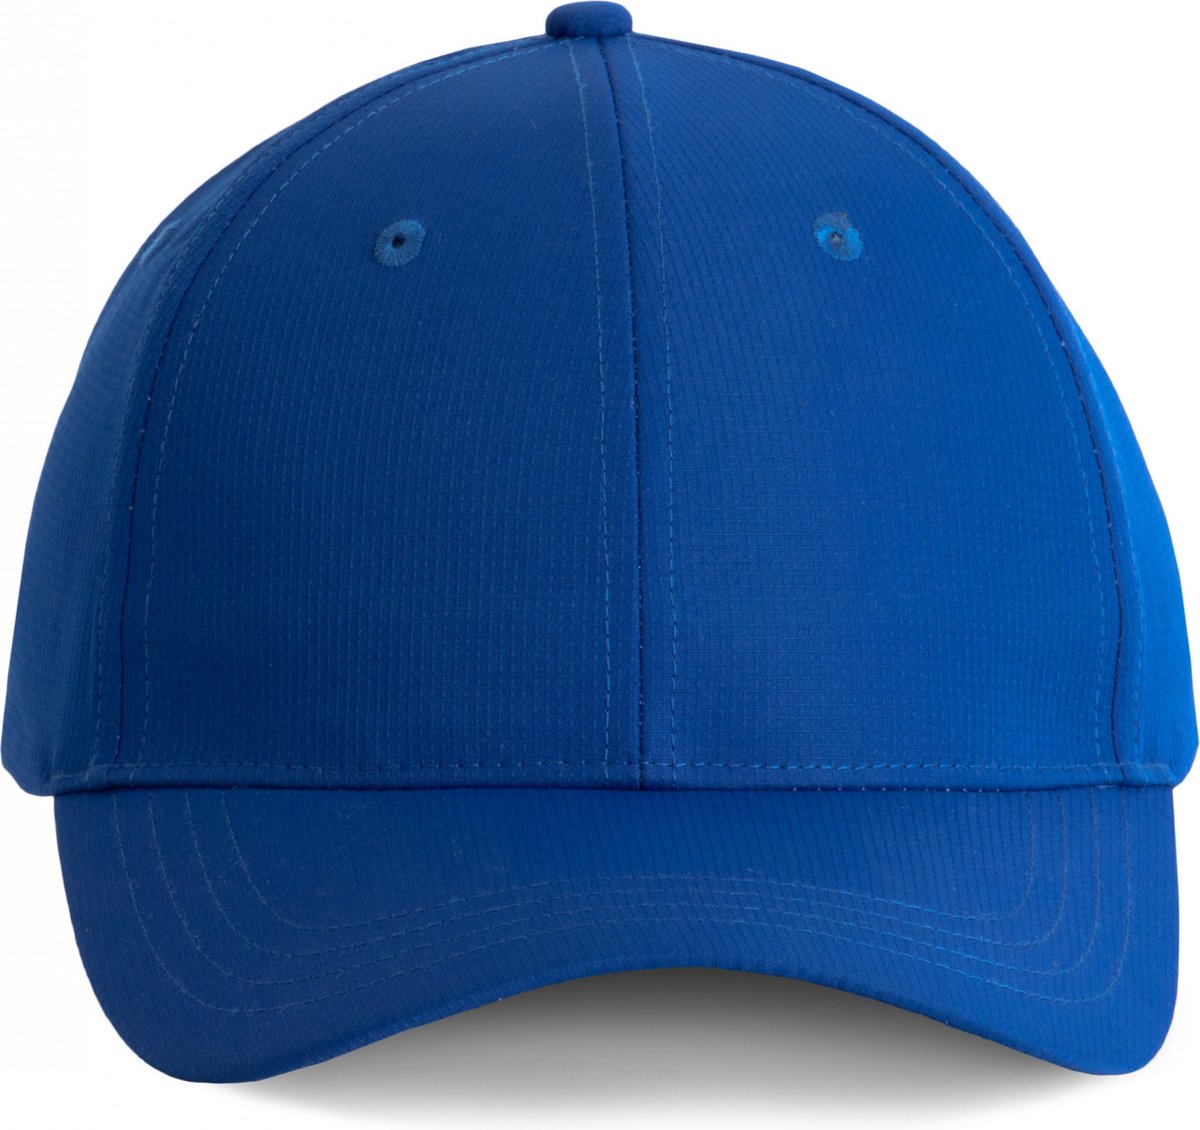 Sportpet - One Size, Royal Blauw